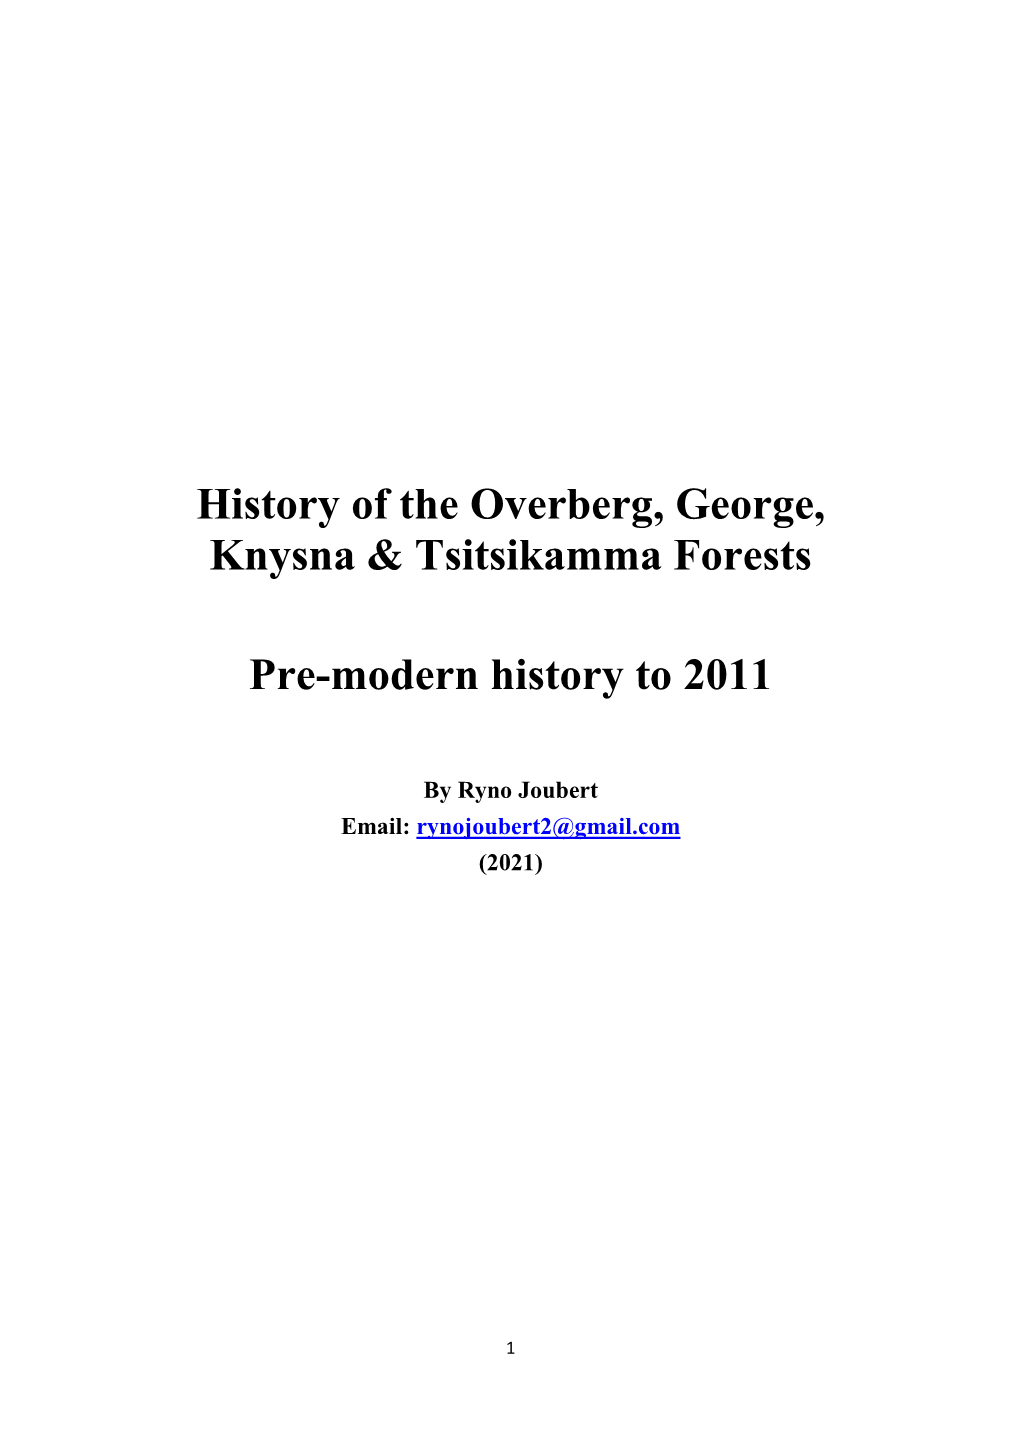 History of the Overberg, George, Knysna & Tsitsikamma Forests Pre